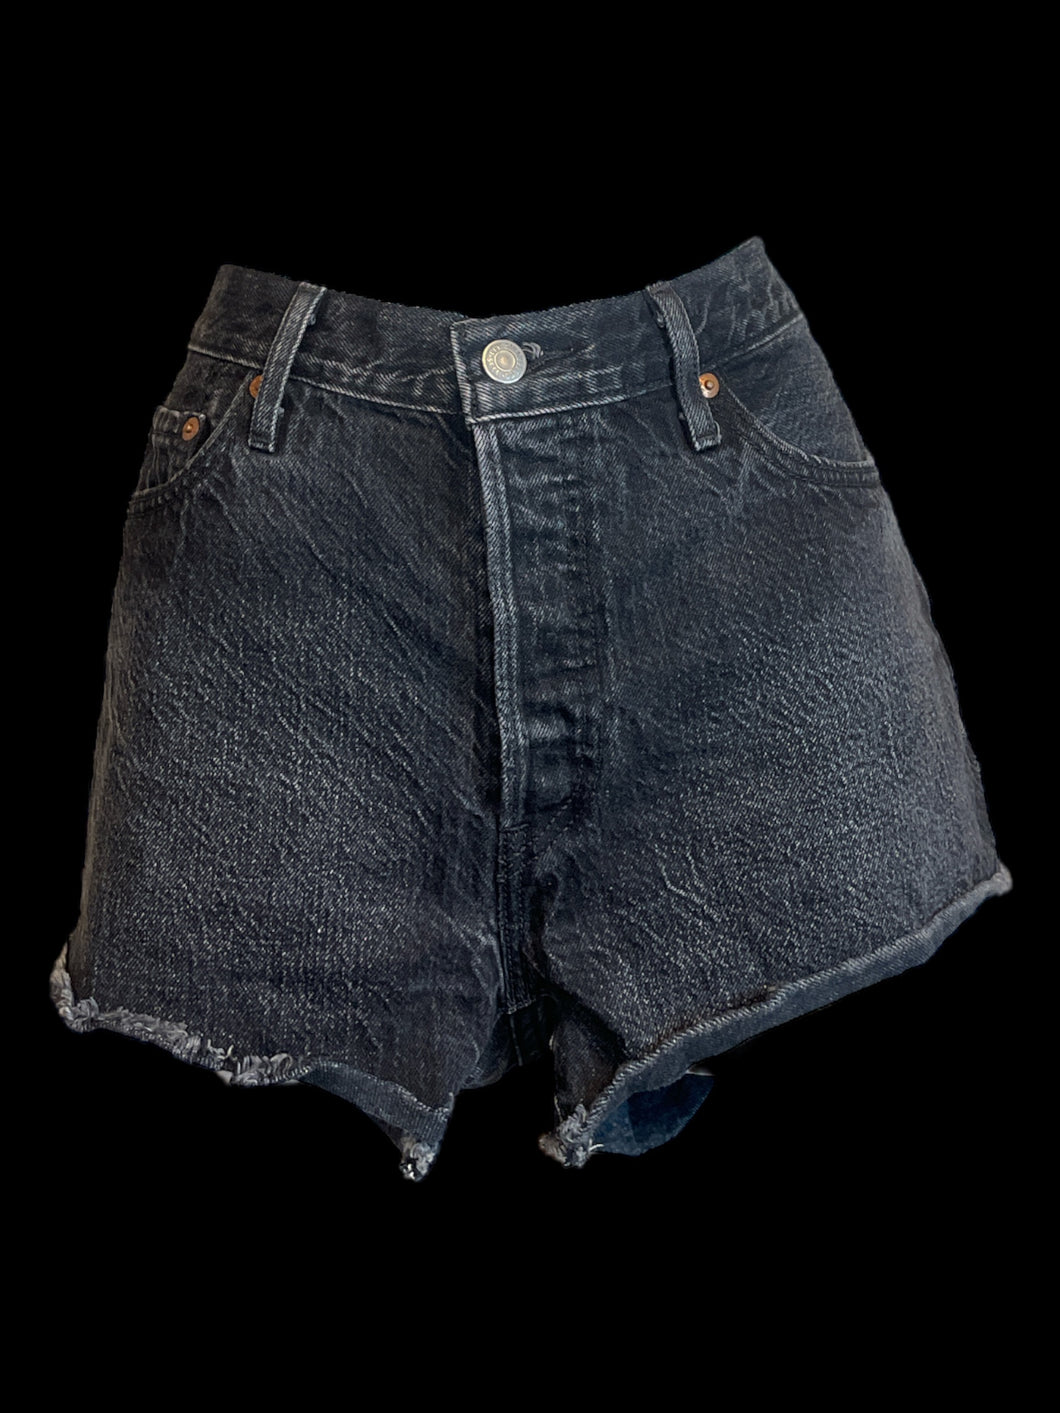 L Black denim high waist shorts w/ raw hem, pockets, belt loops, & hidden five button closure